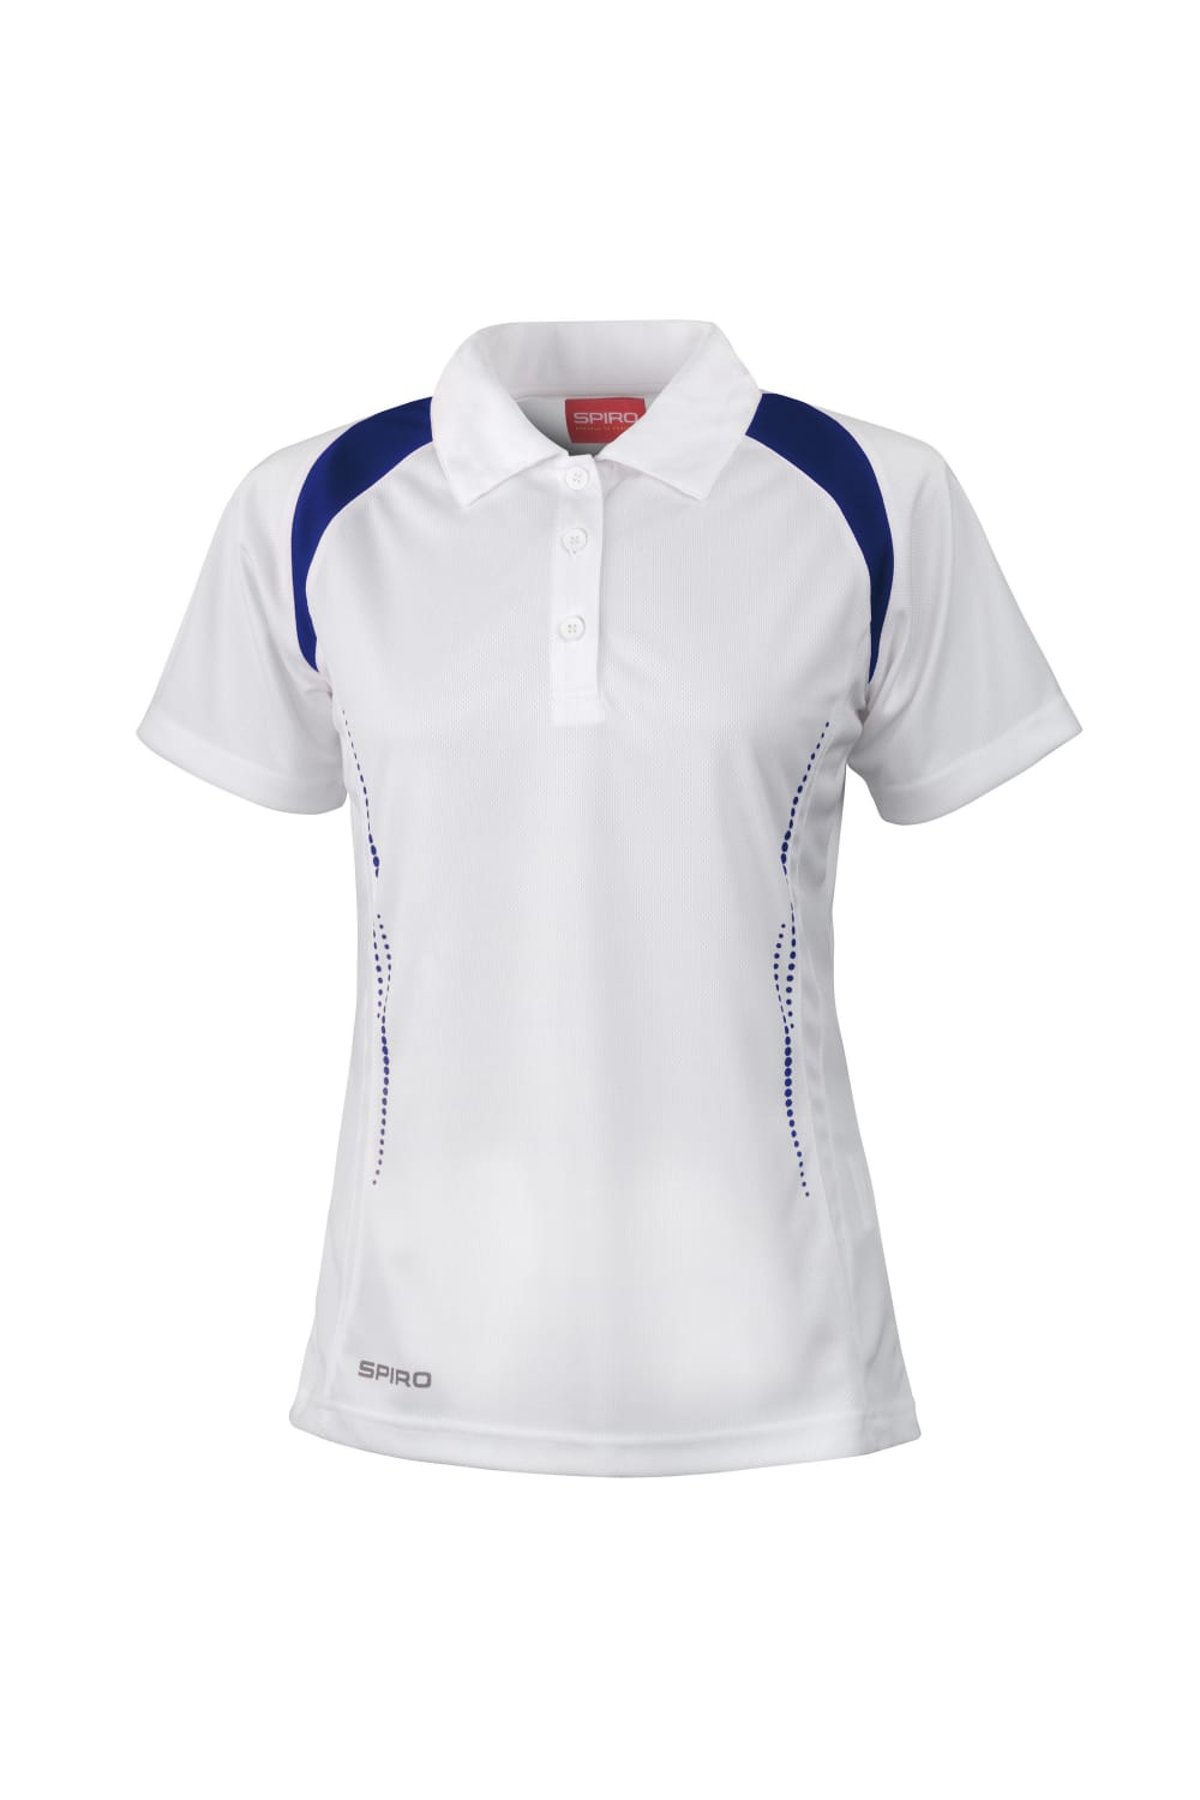 XL Spiro Womens/Ladies Sports Team Spirit Performance Polo Shirt White/Navy 